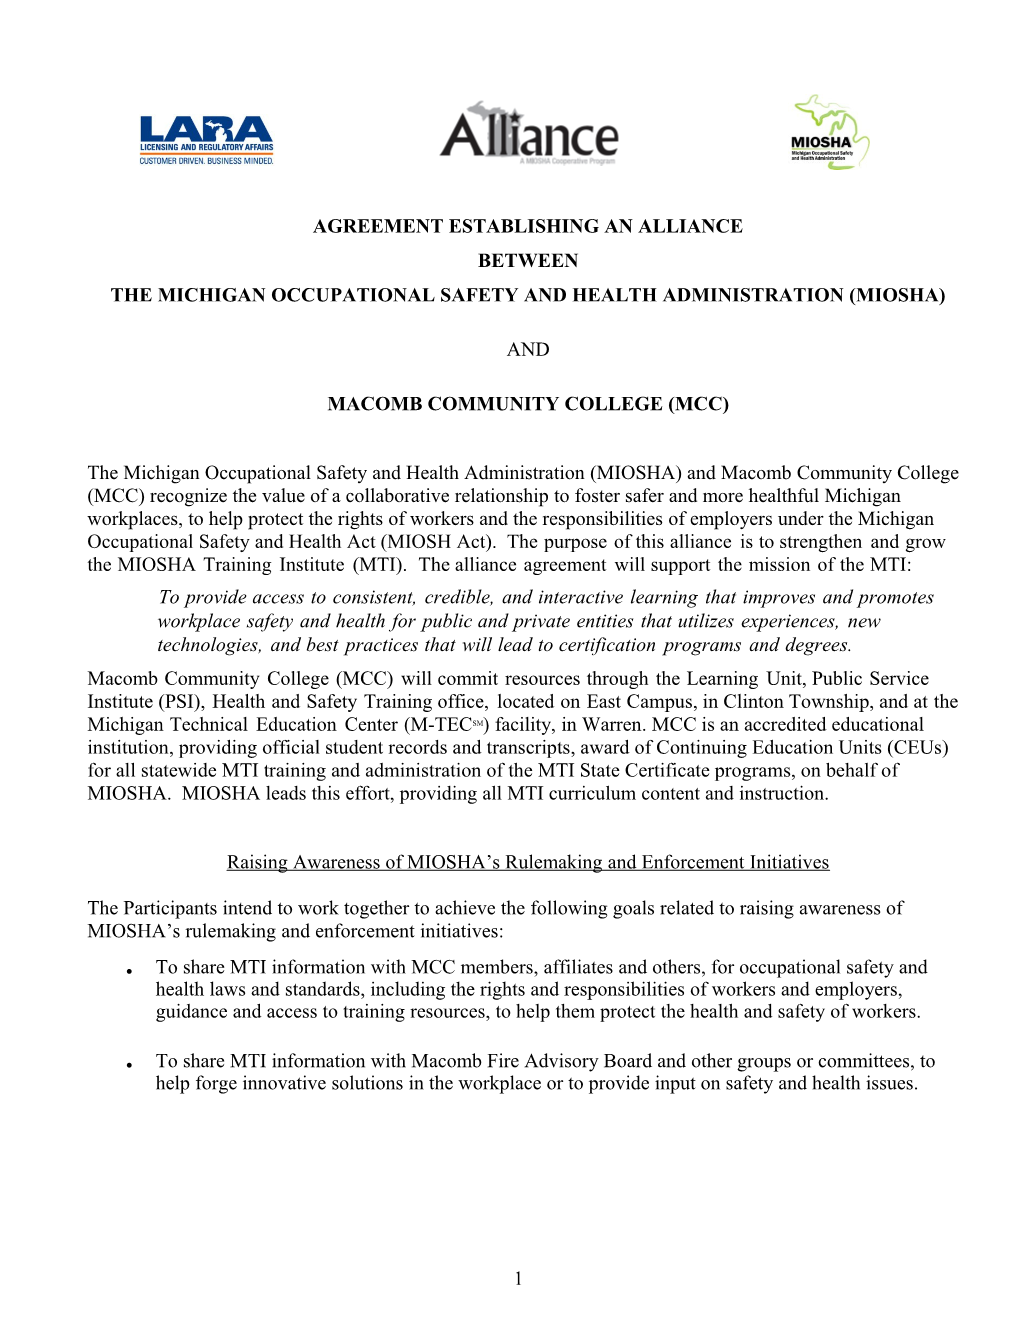 Agreement Establishing an Alliance Between MIOSHA & Macomb Community College (MCC)